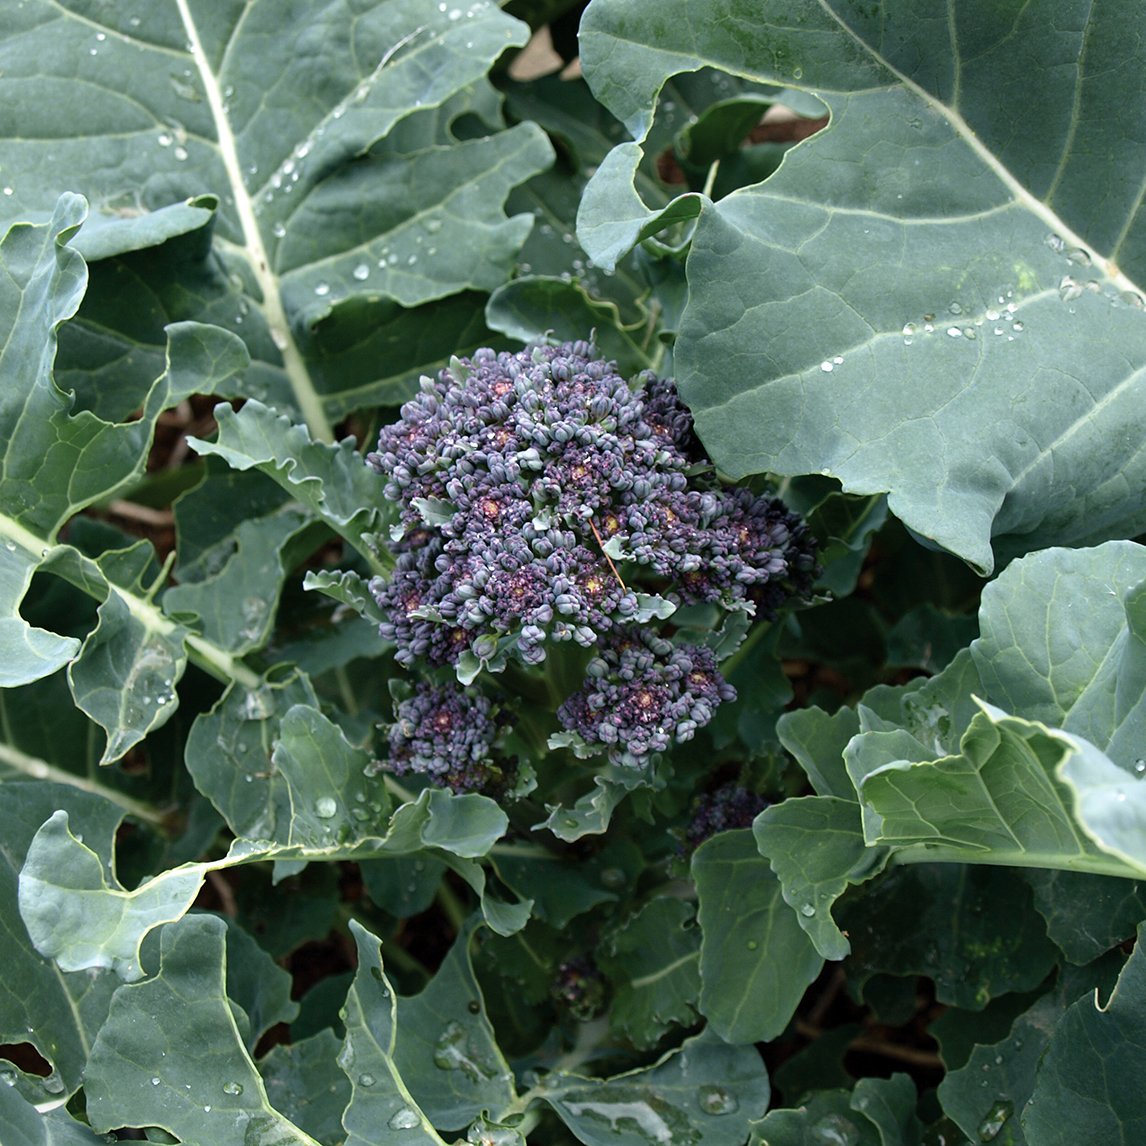 Broccoli 'Purple Sprouting'